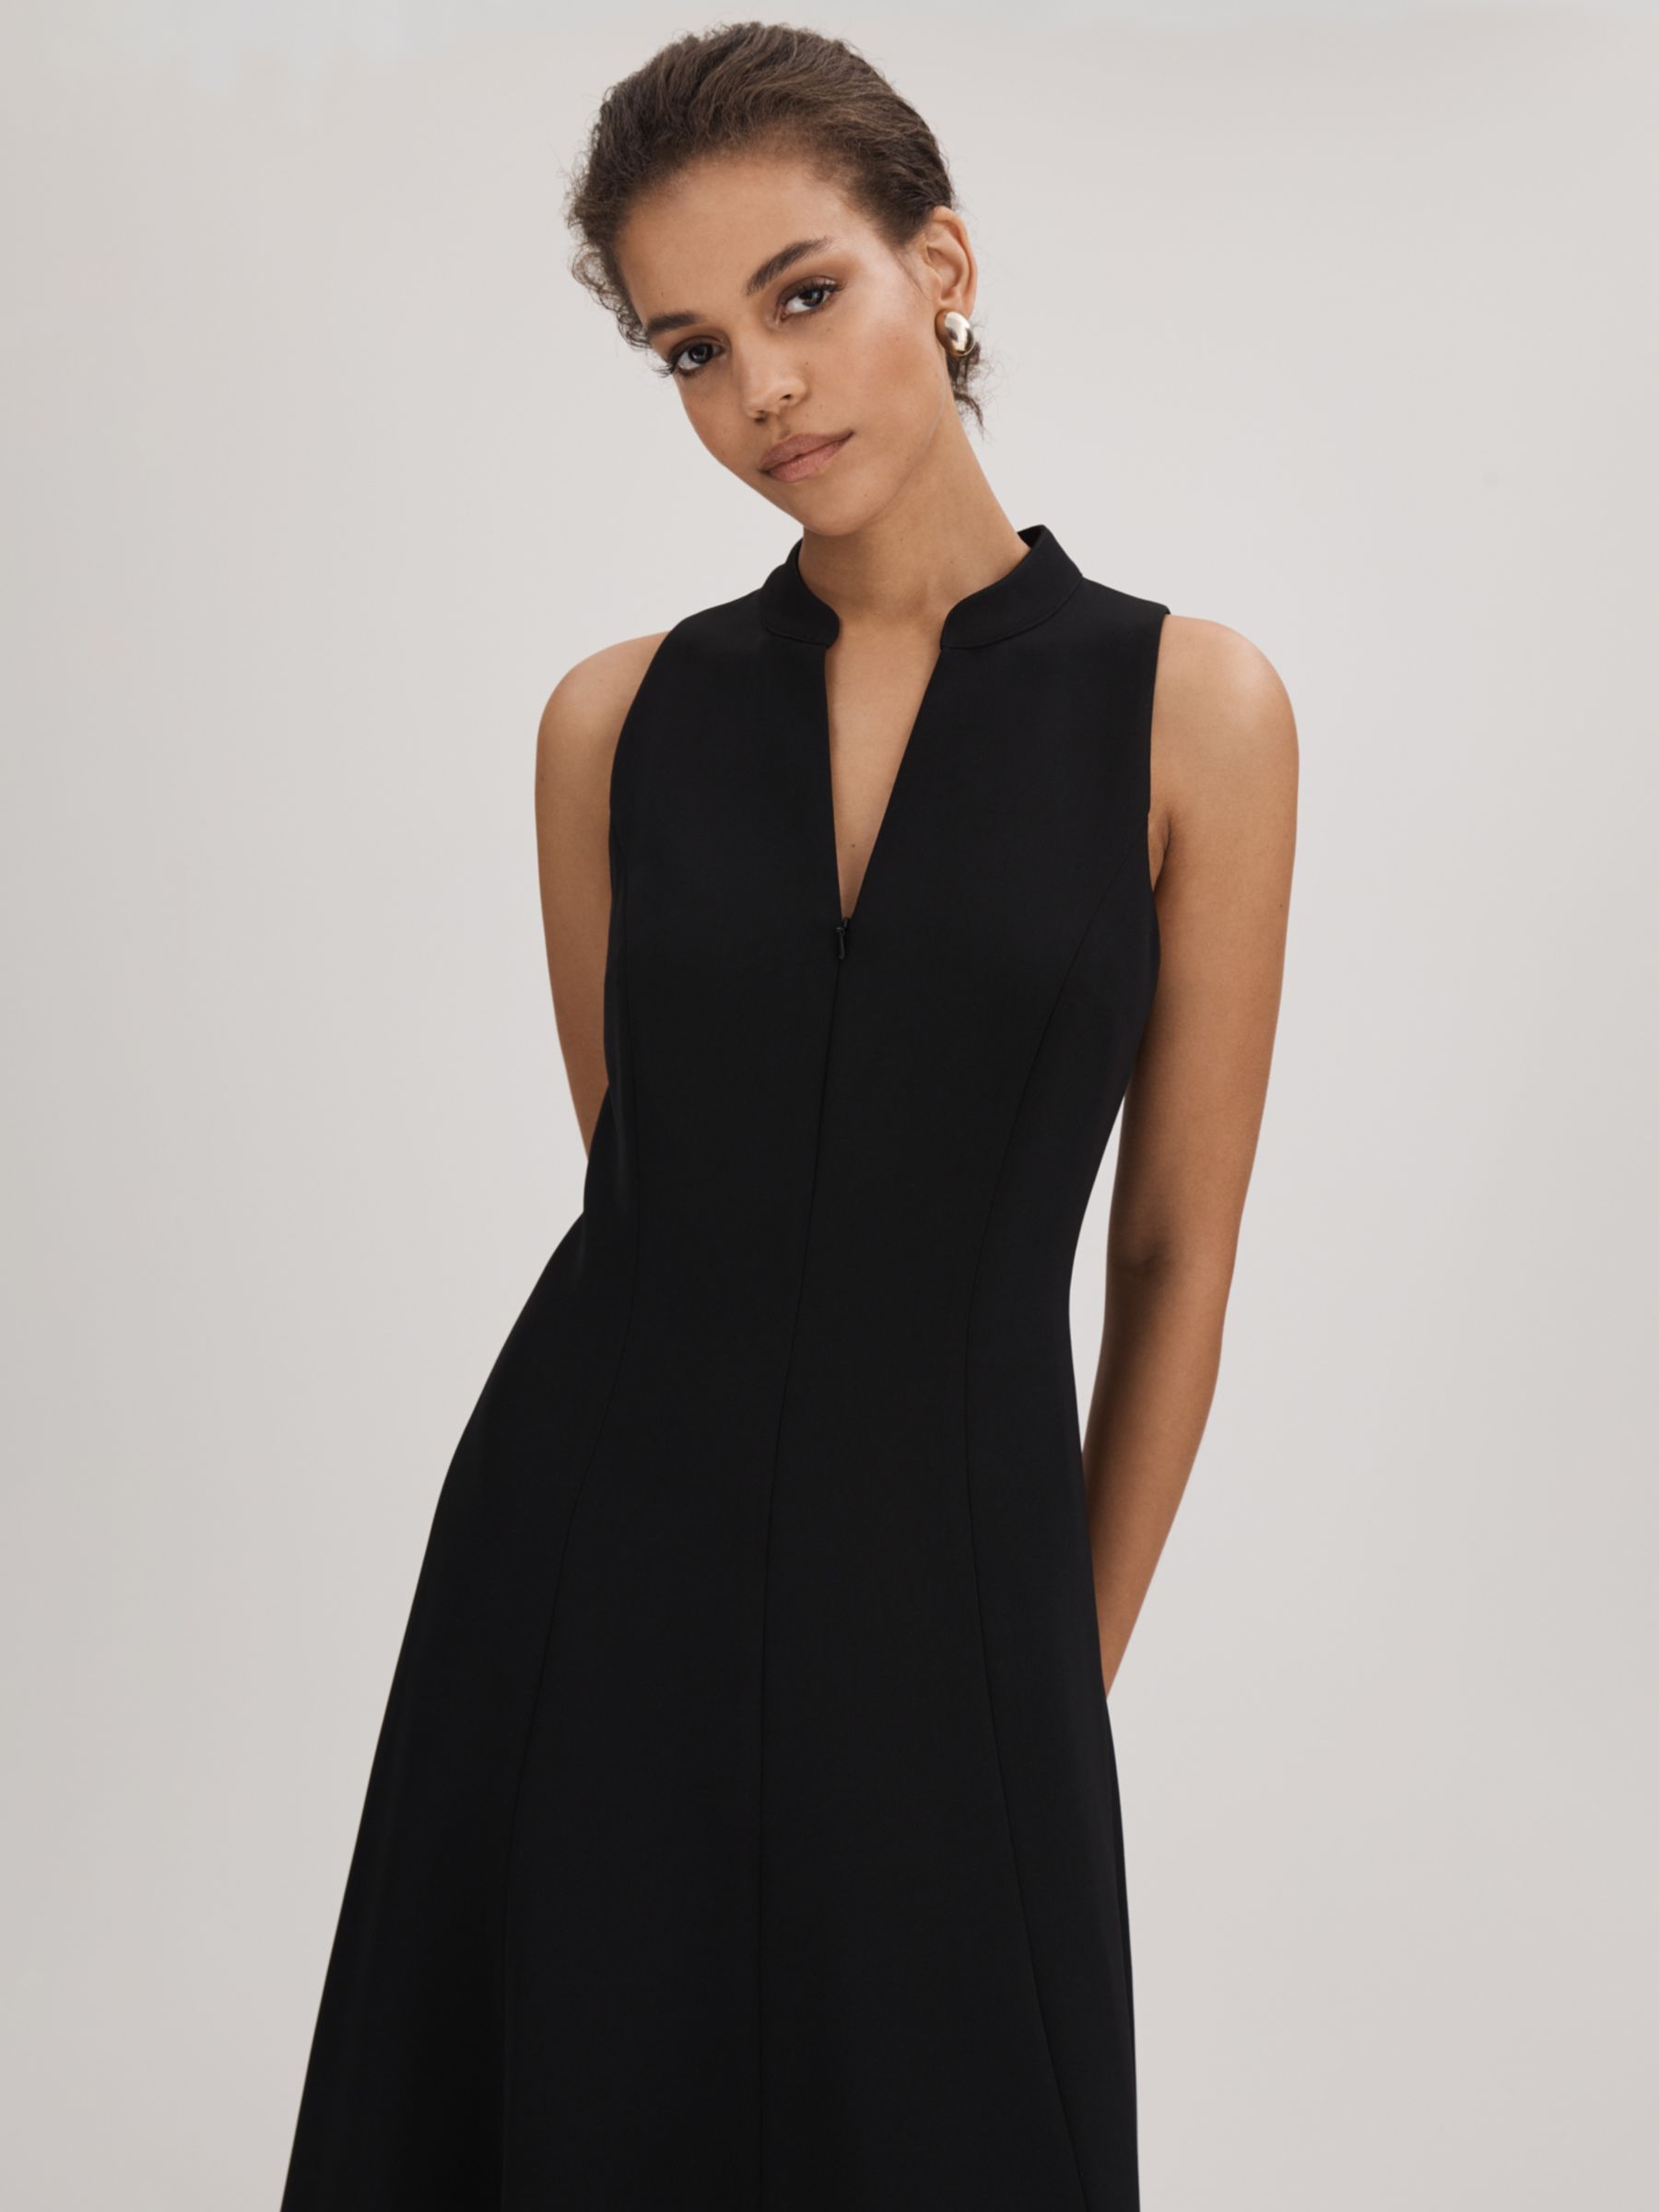 FLORERE Zip Front Midi Dress, Black, 12